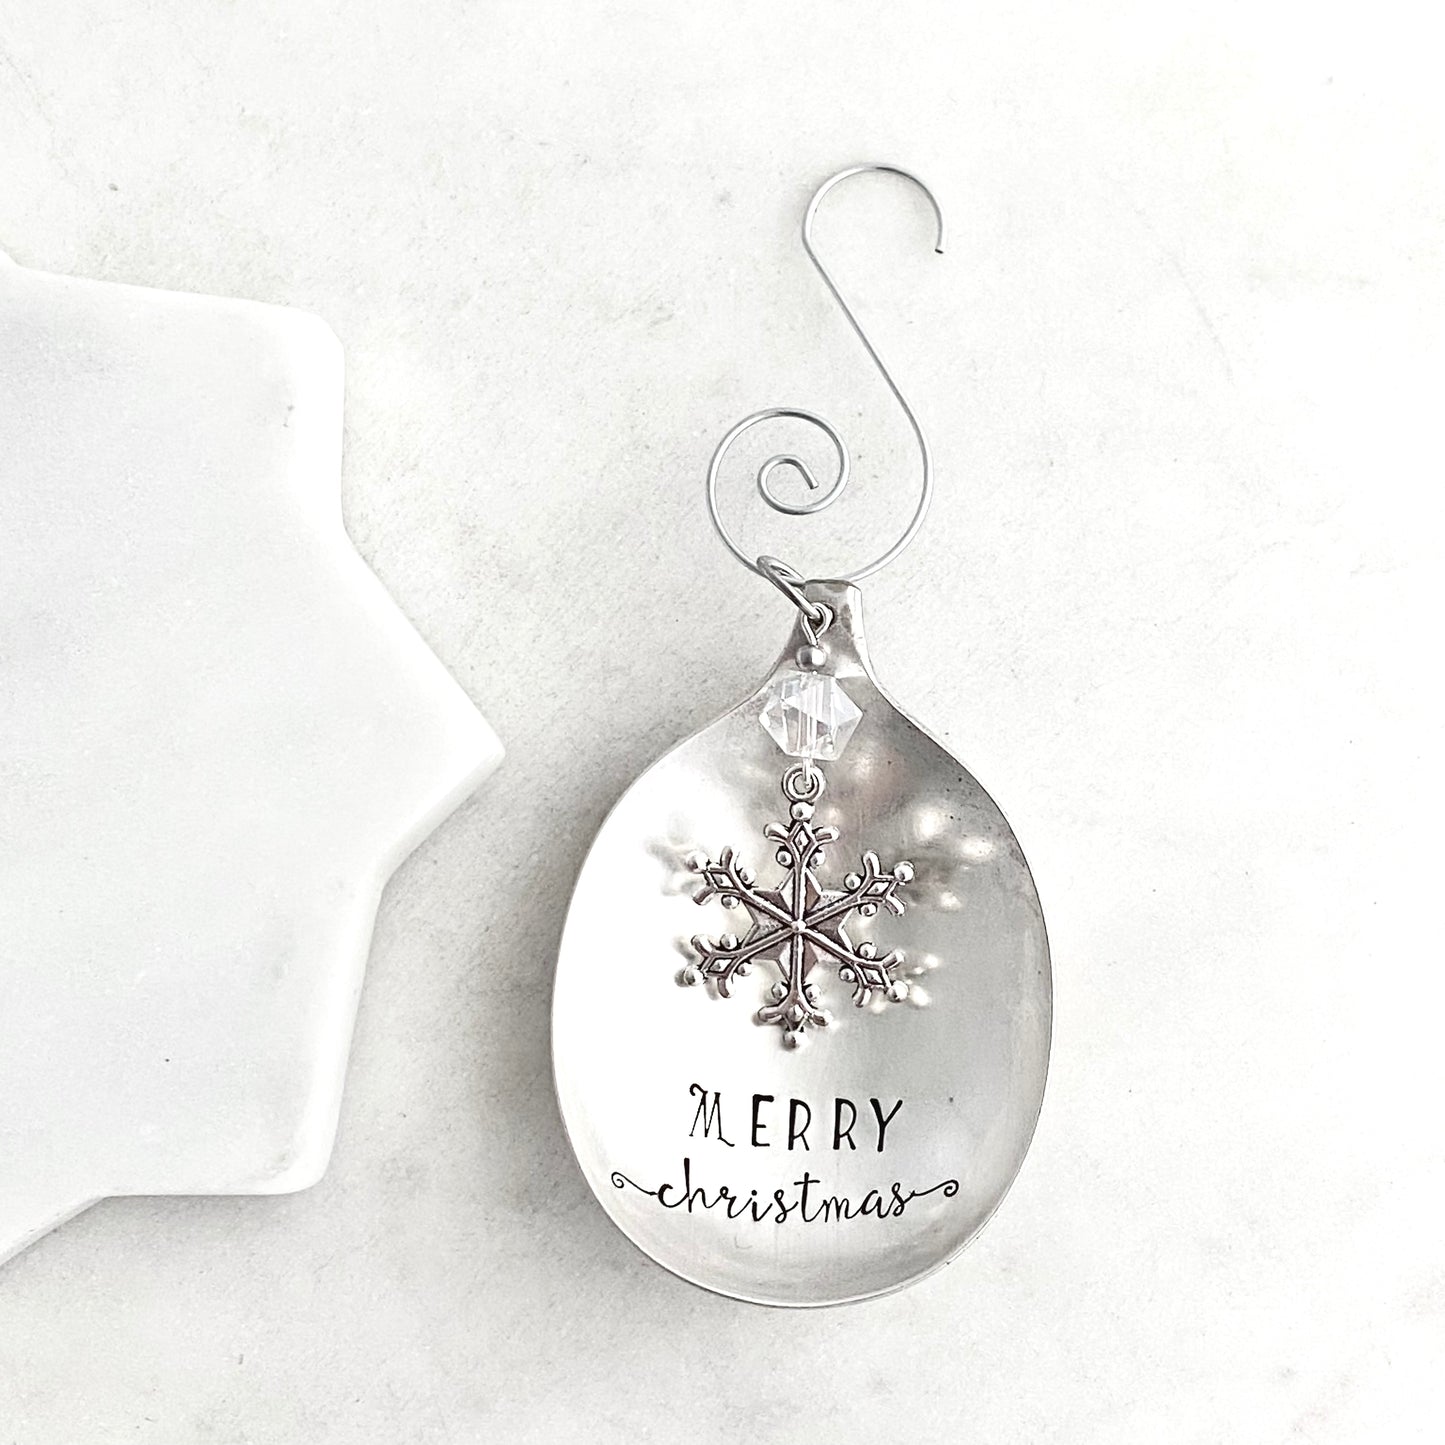 Merry Christmas, Spoon Bowl Ornament, Hand Stamped Vintage Spoon Ornament, Snowflake Ornament Ornaments callistafaye   